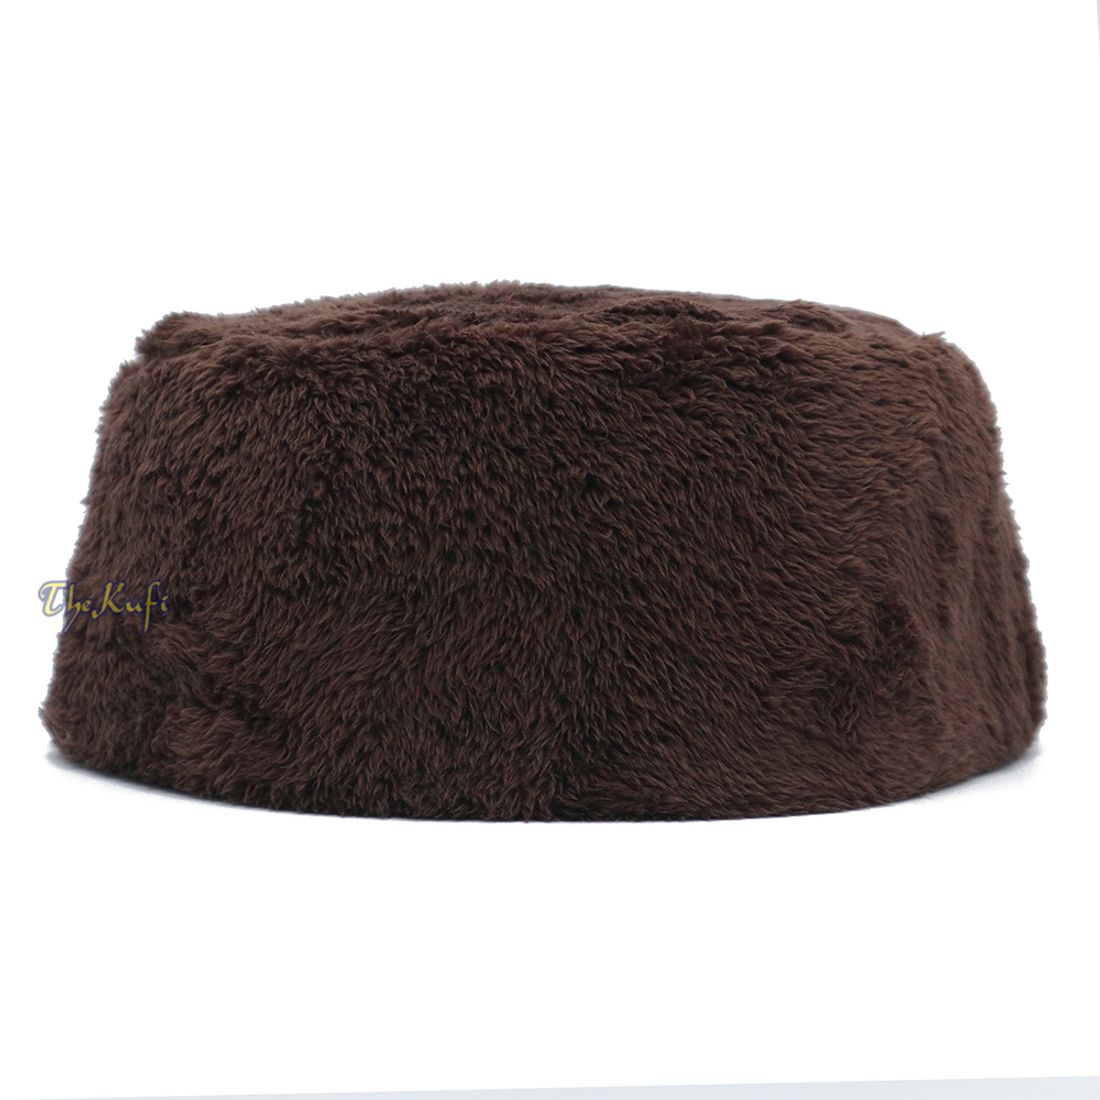 Dark Brown Winter Kufi Faux Fur Warm Chechen Uzbeki Style Islamic Hat Plush One-size Medium-large Stretchy 4-inch Tall Head Cover Muslim